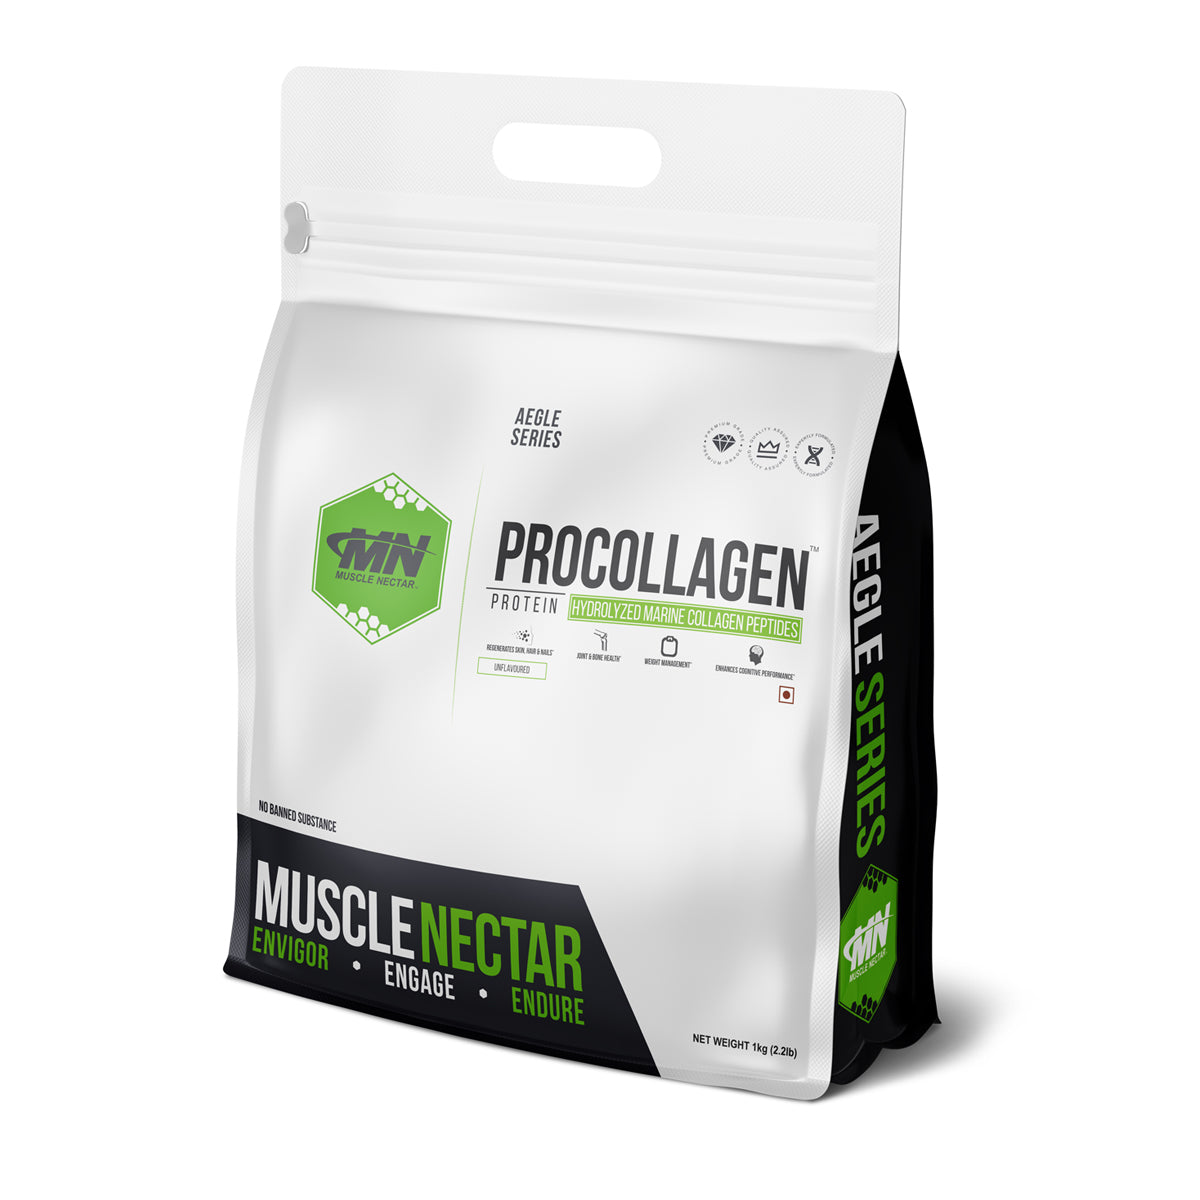 PROCOLLAGEN® - Hydrolyzed Collagen Peptides Protein - Muscle Nectar